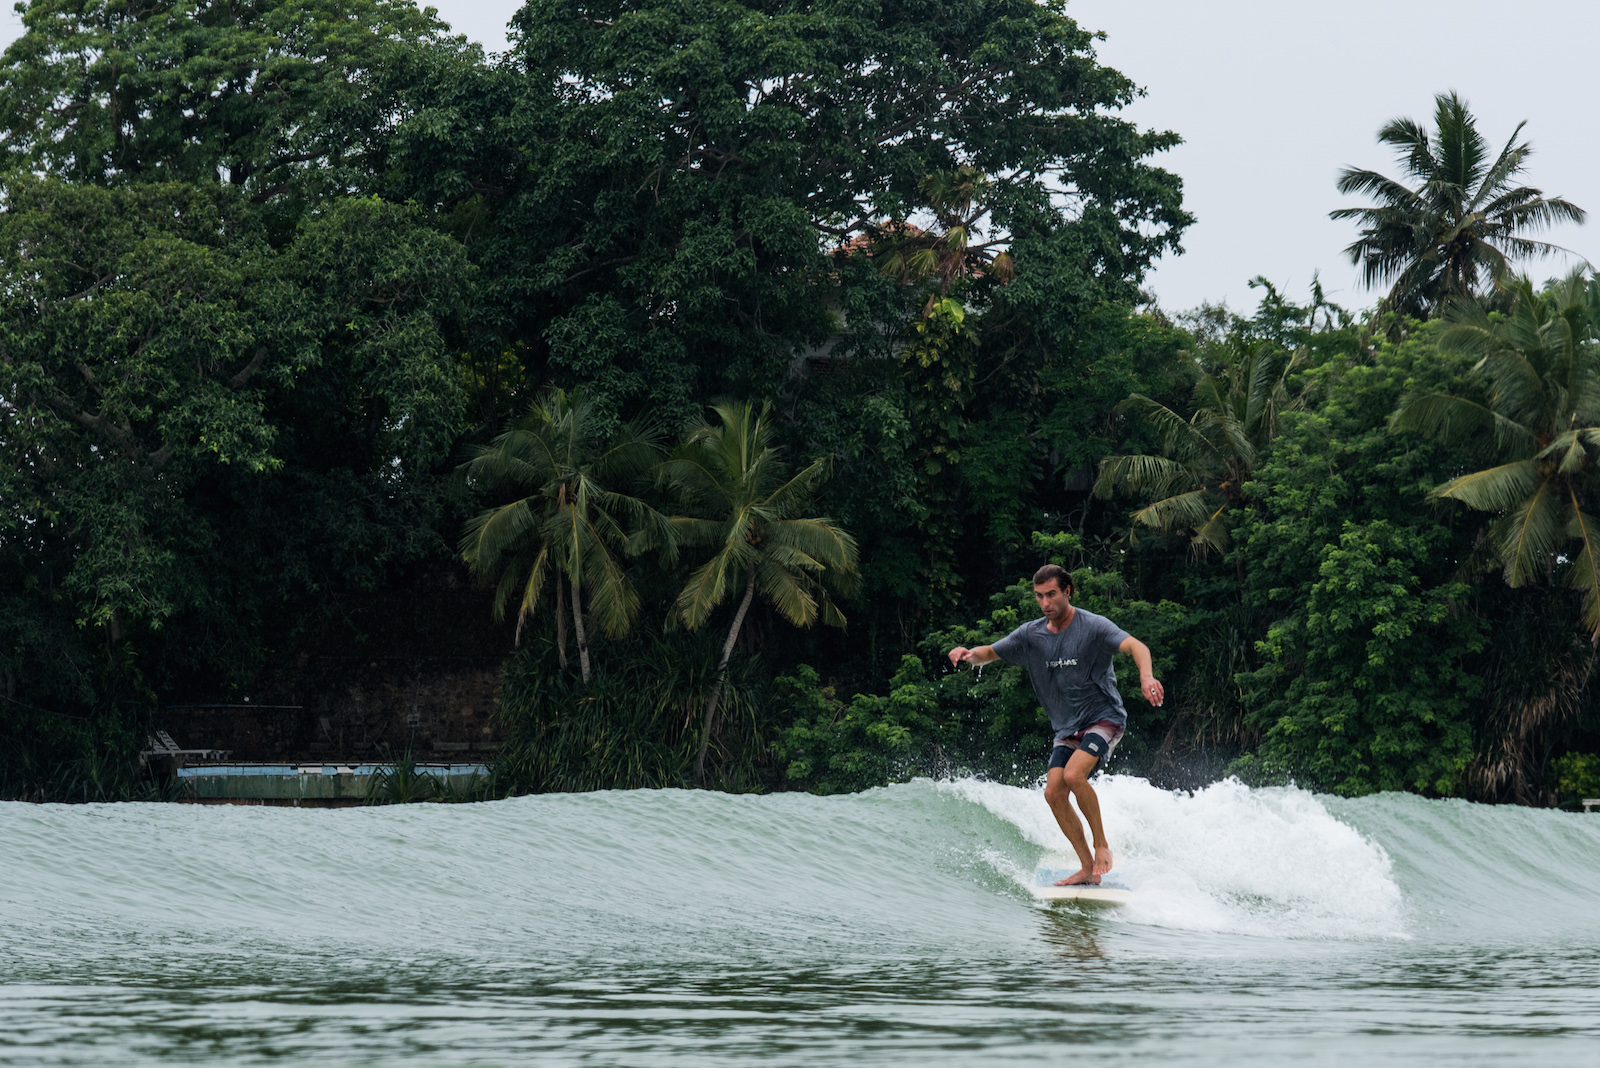 Josh surfing Island Weligama